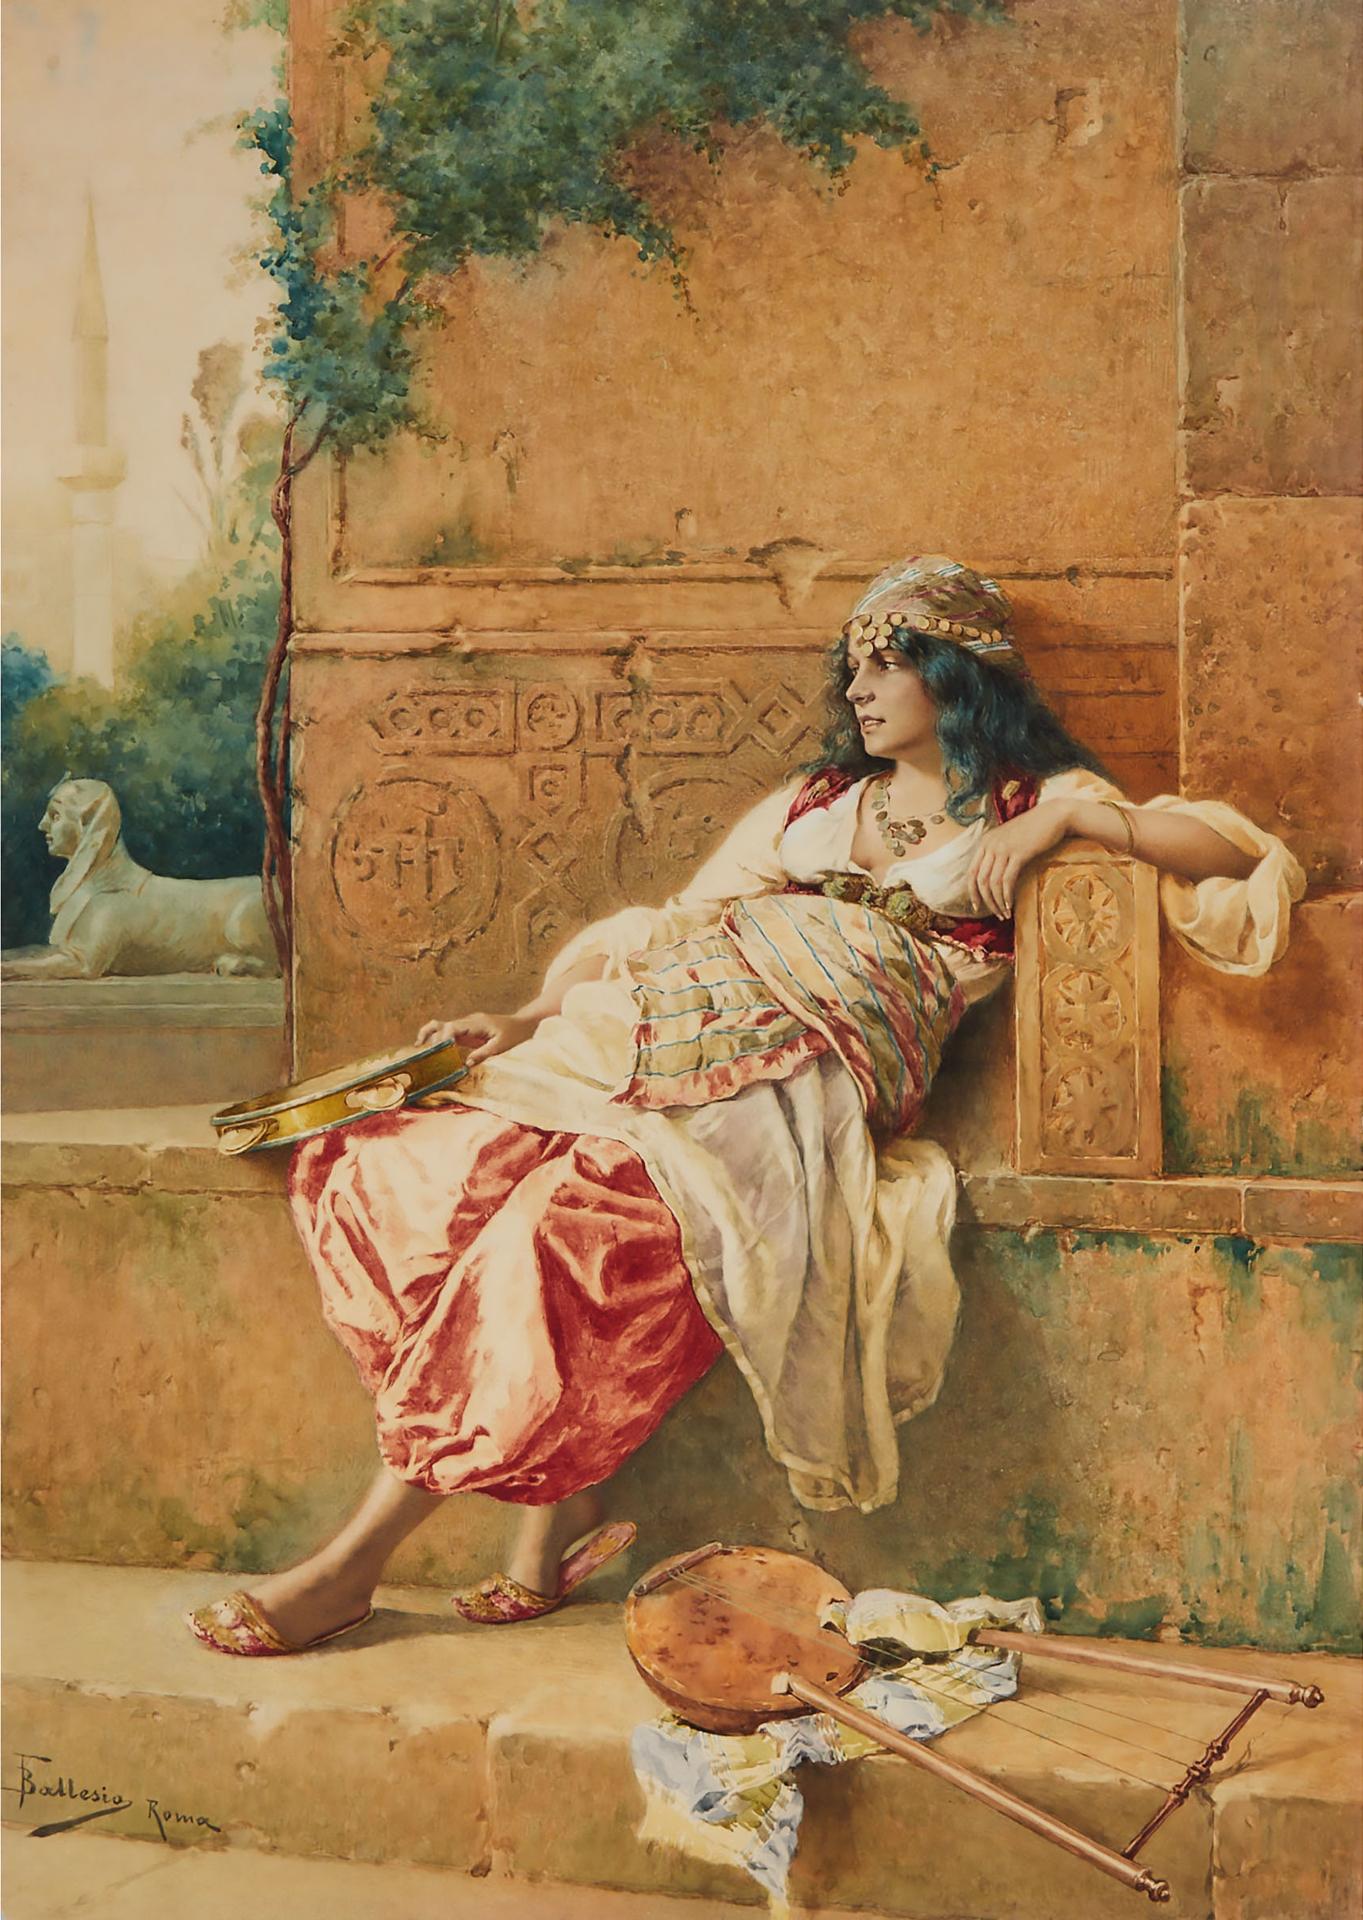 Francesco Ballesio (1880-1923) - Female Musician At Rest